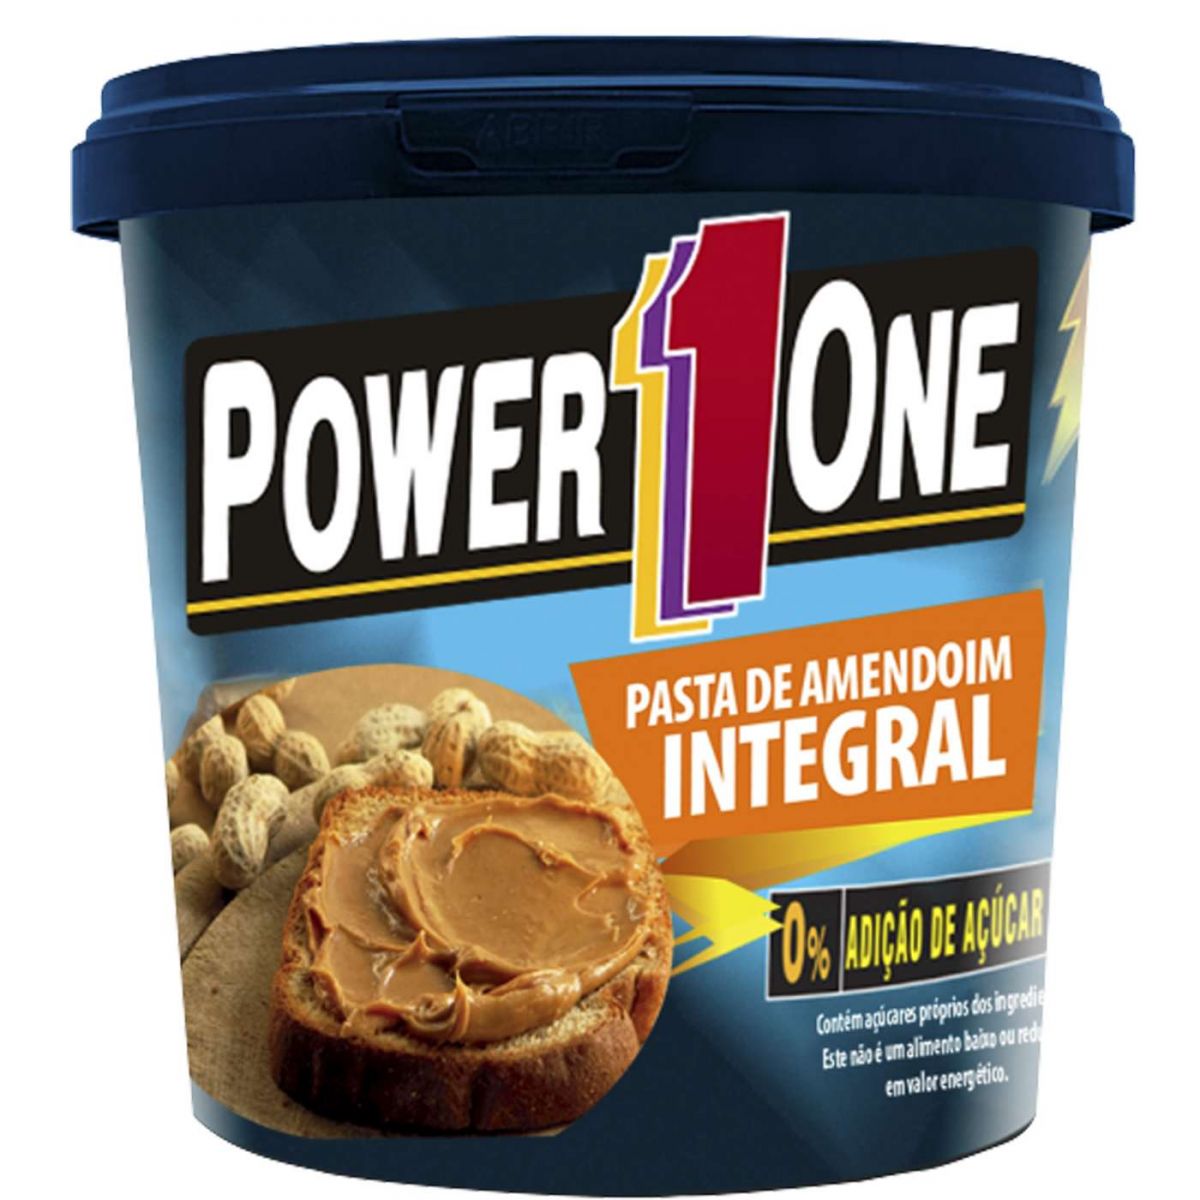 https://www.nutrifastshop.com.br/img/products/pasta-de-amendoim-torrado-integral-1000g-power-one_1_1200.jpg